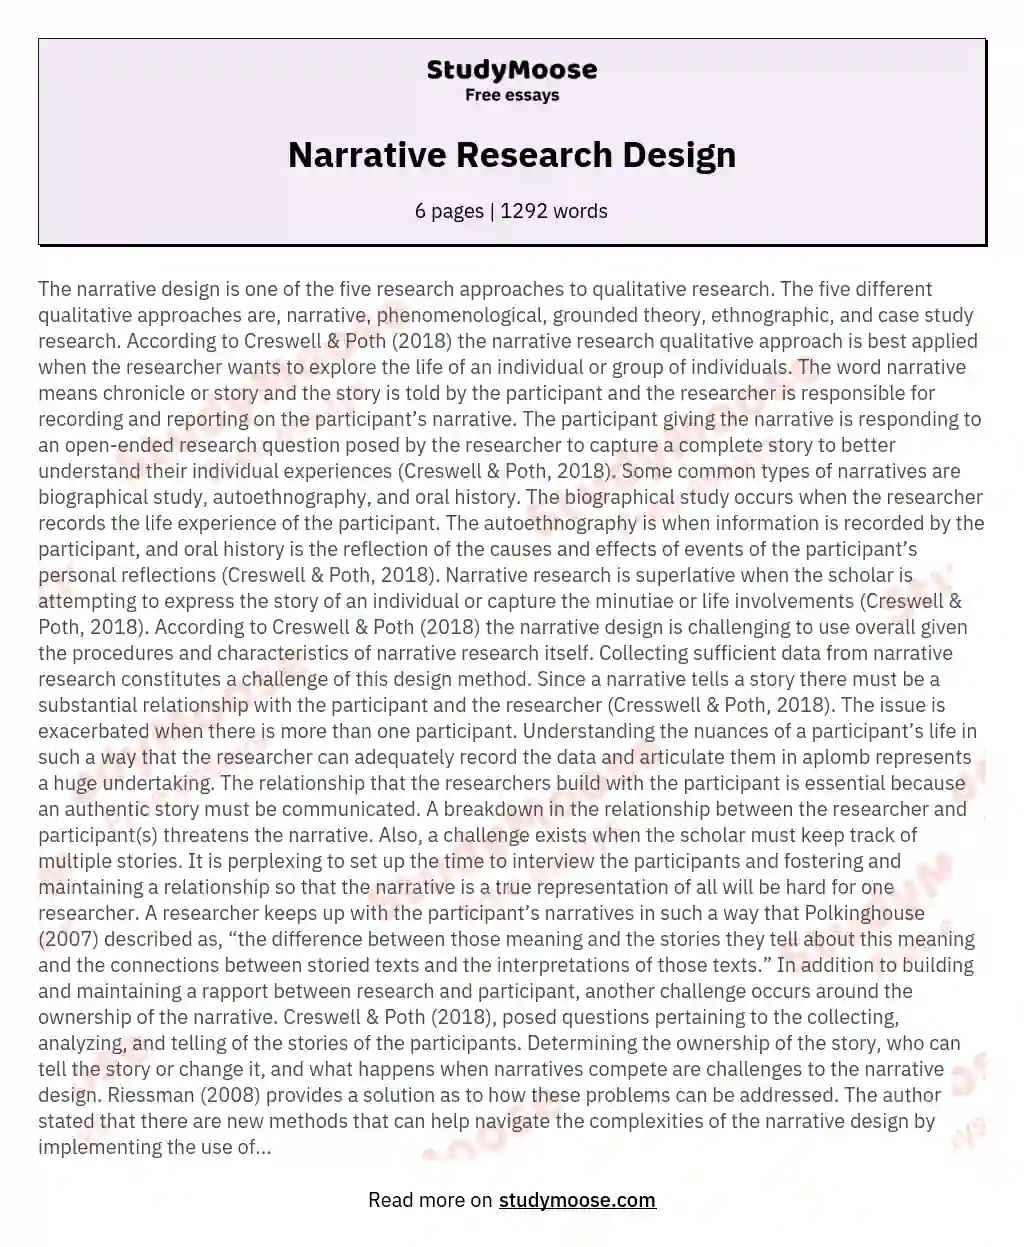 Narrative Research Design essay